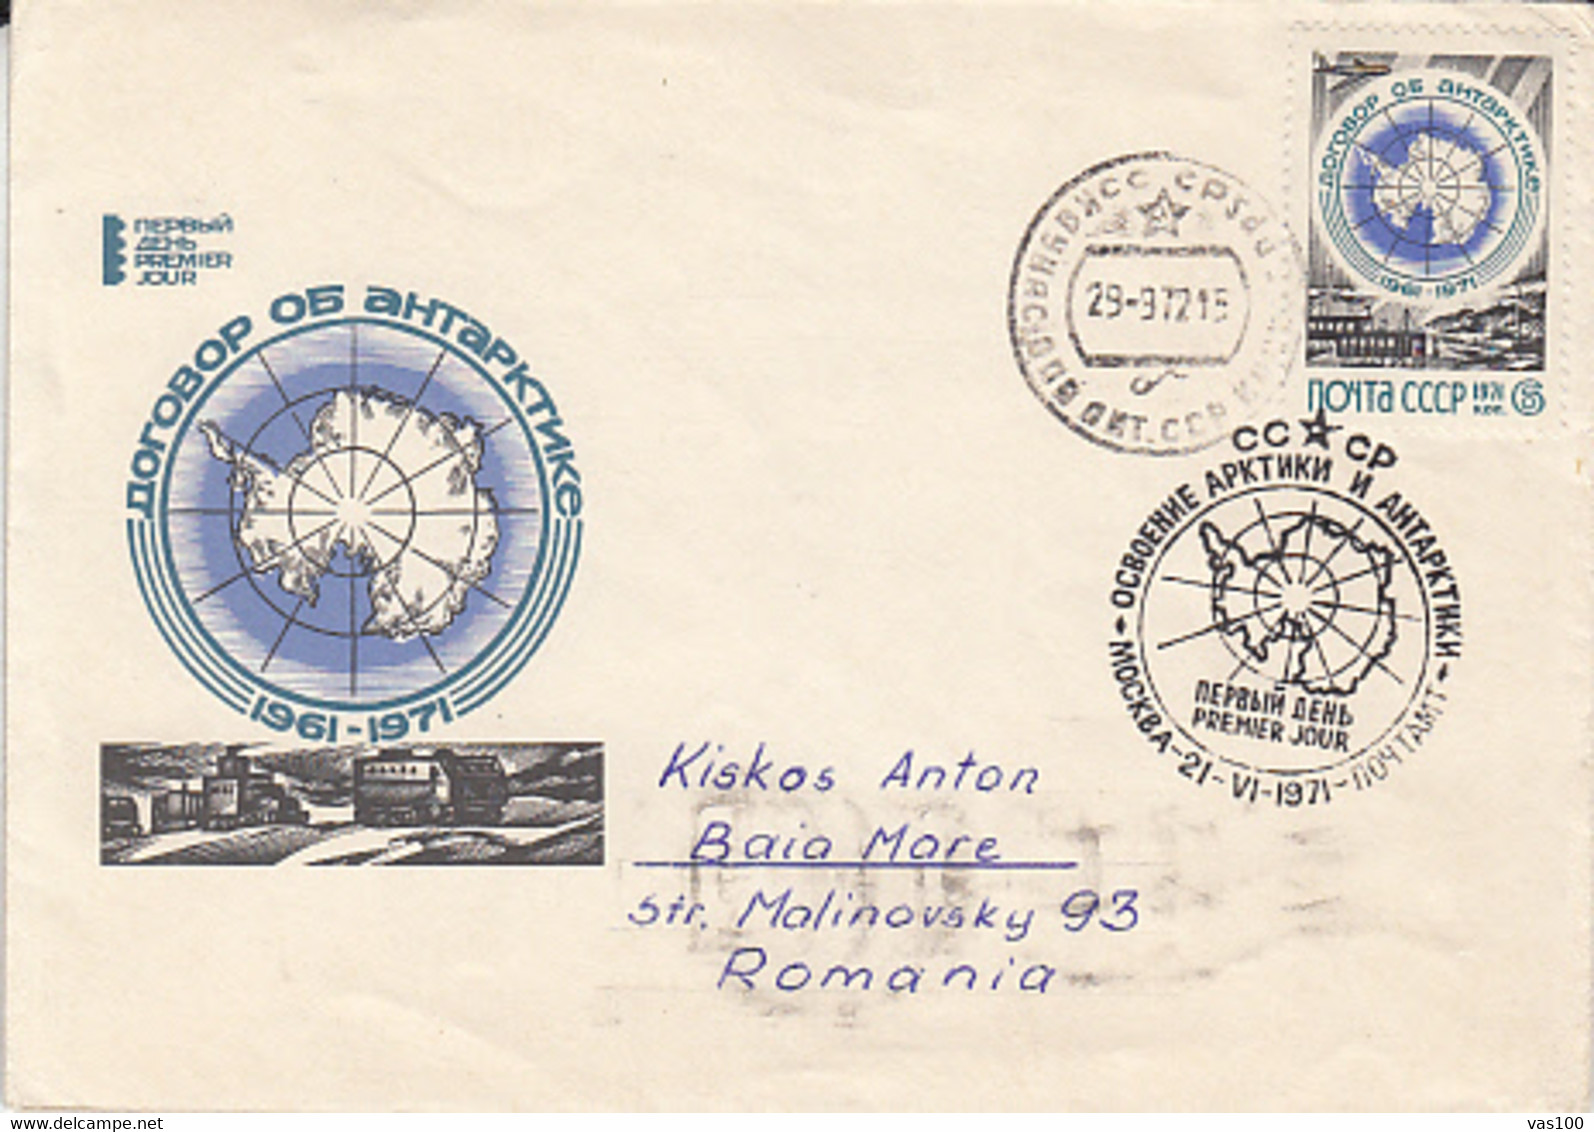 SOUTH POLE, ANTARCTIC TREATY, COVER FDC, 1972, RUSSIA - Antarctisch Verdrag